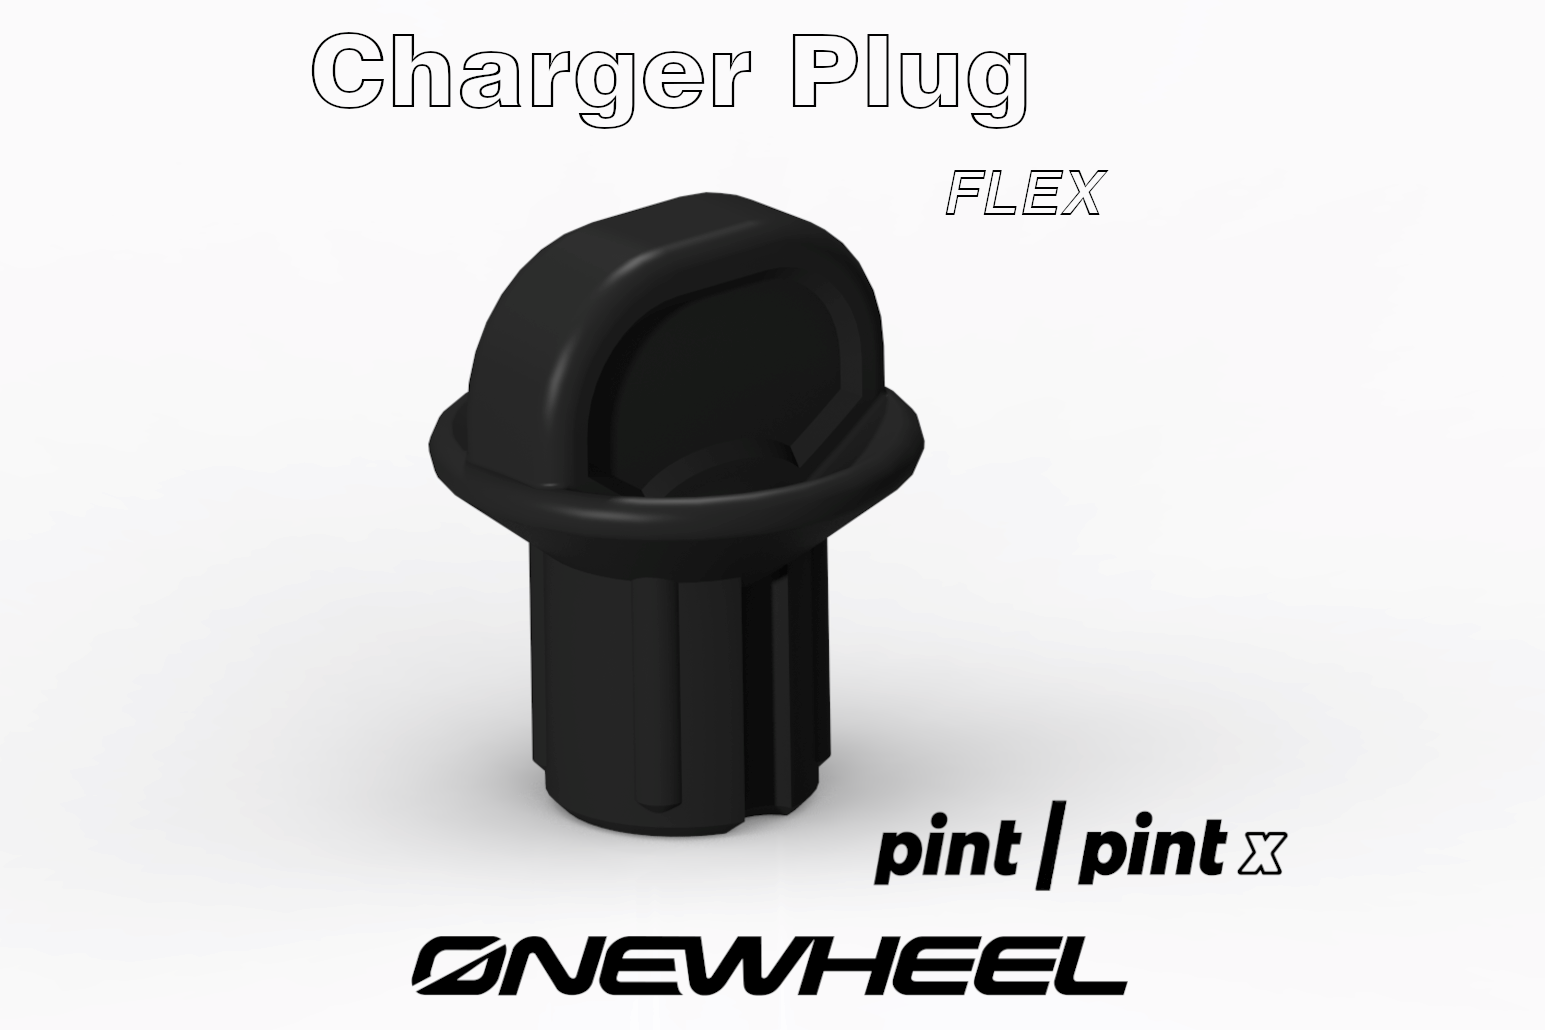 FLEX Charger Plug for Onewheel Pint / Pint X